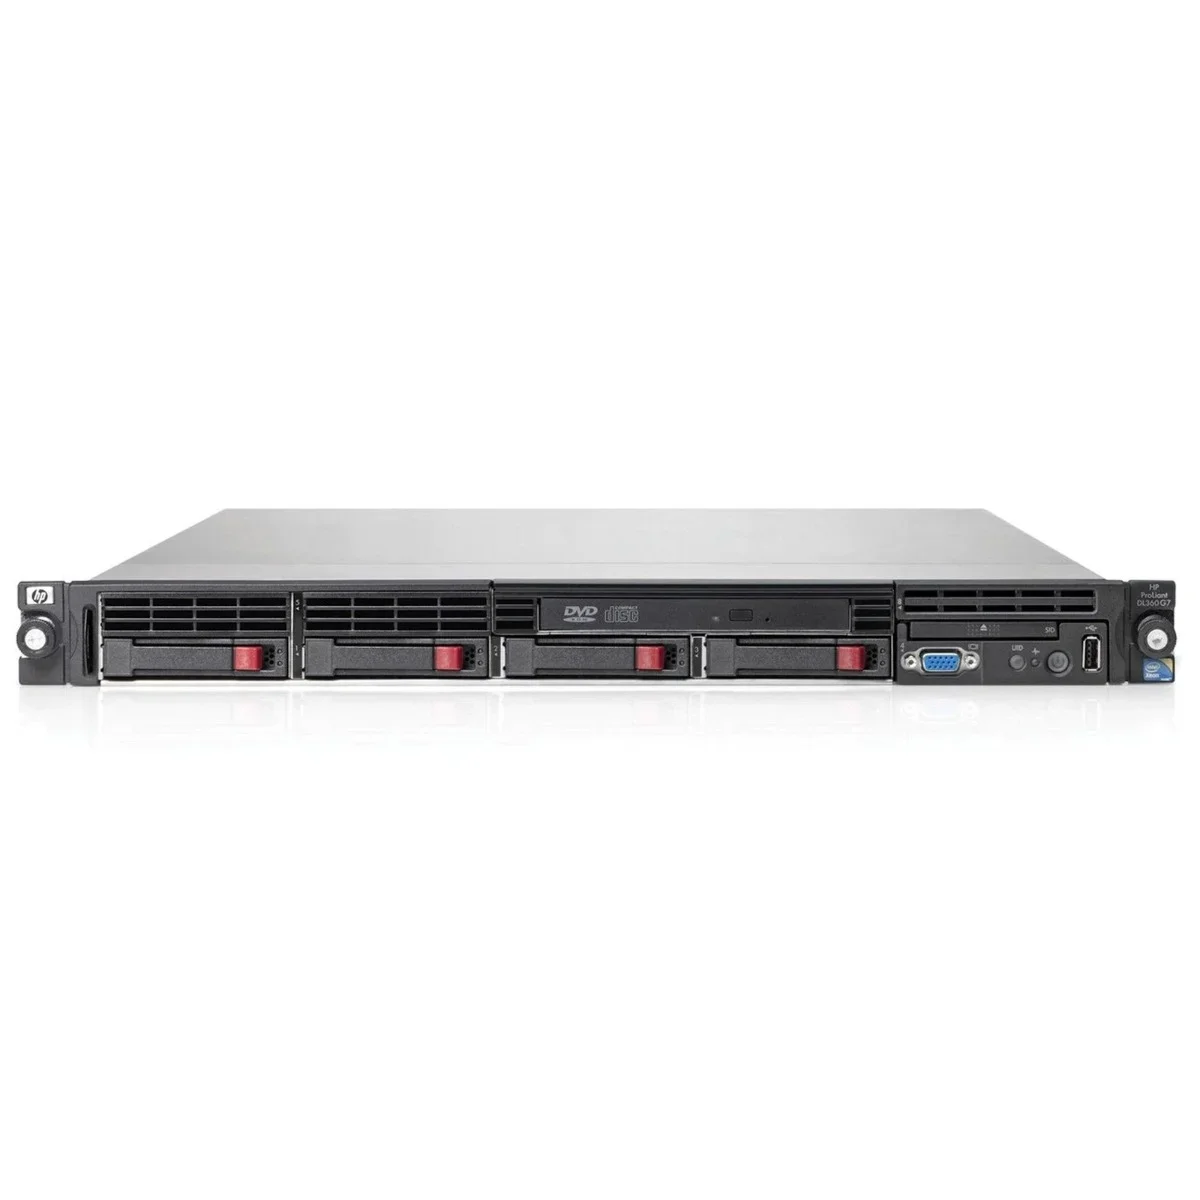 HPE ProLiant DL360 G6 1U Rack Server